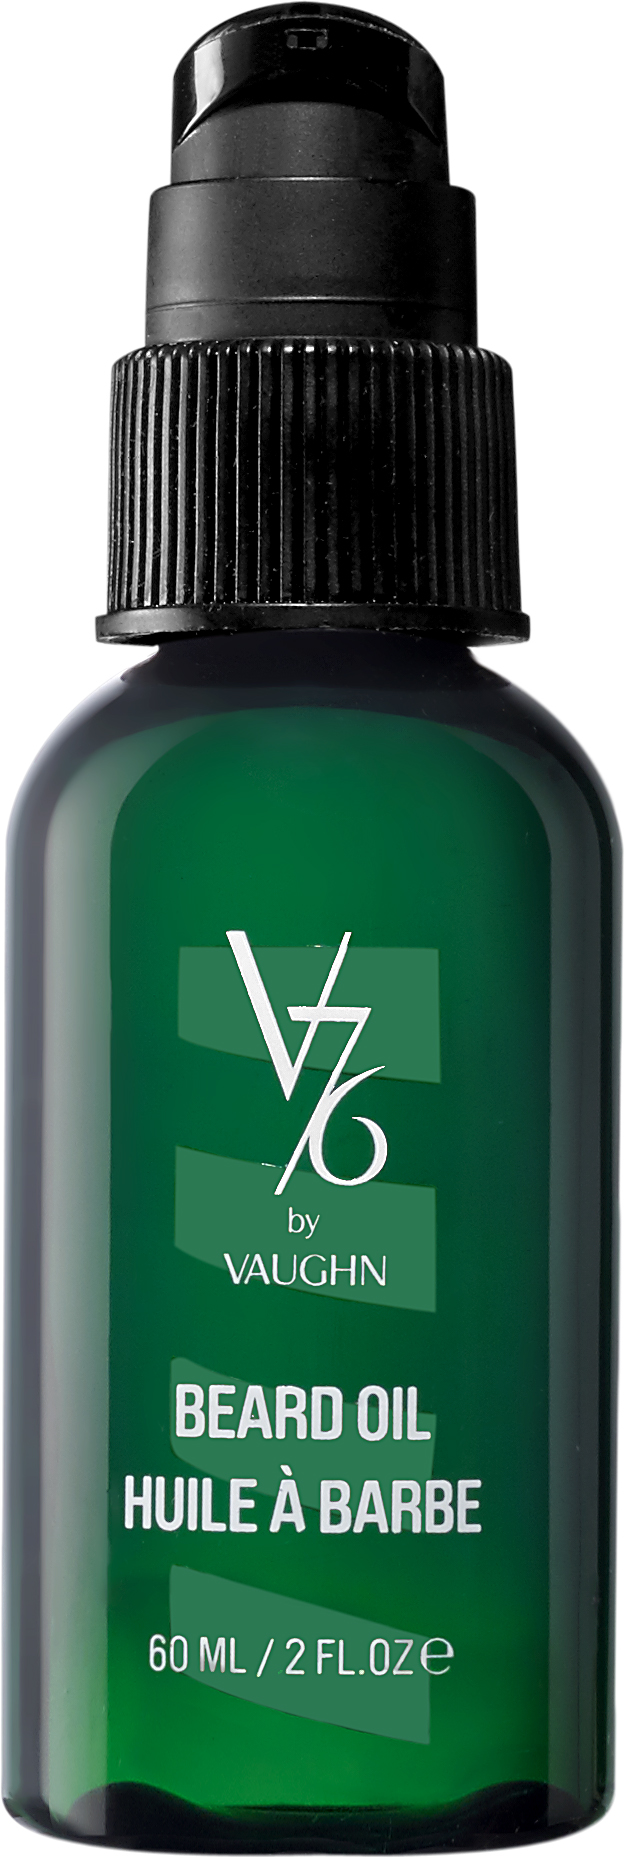 V76 by Vaughn Beard Oil 60ml